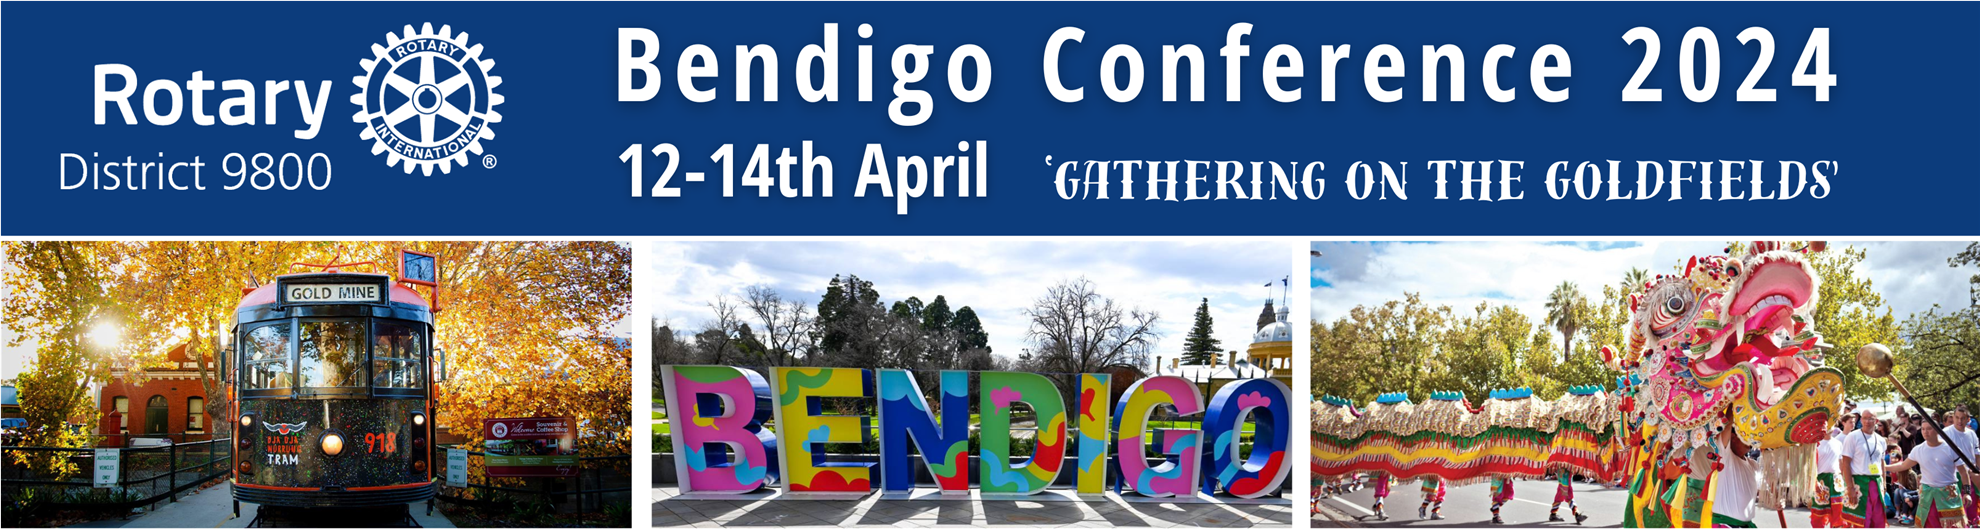 Bendigo Conference 2024